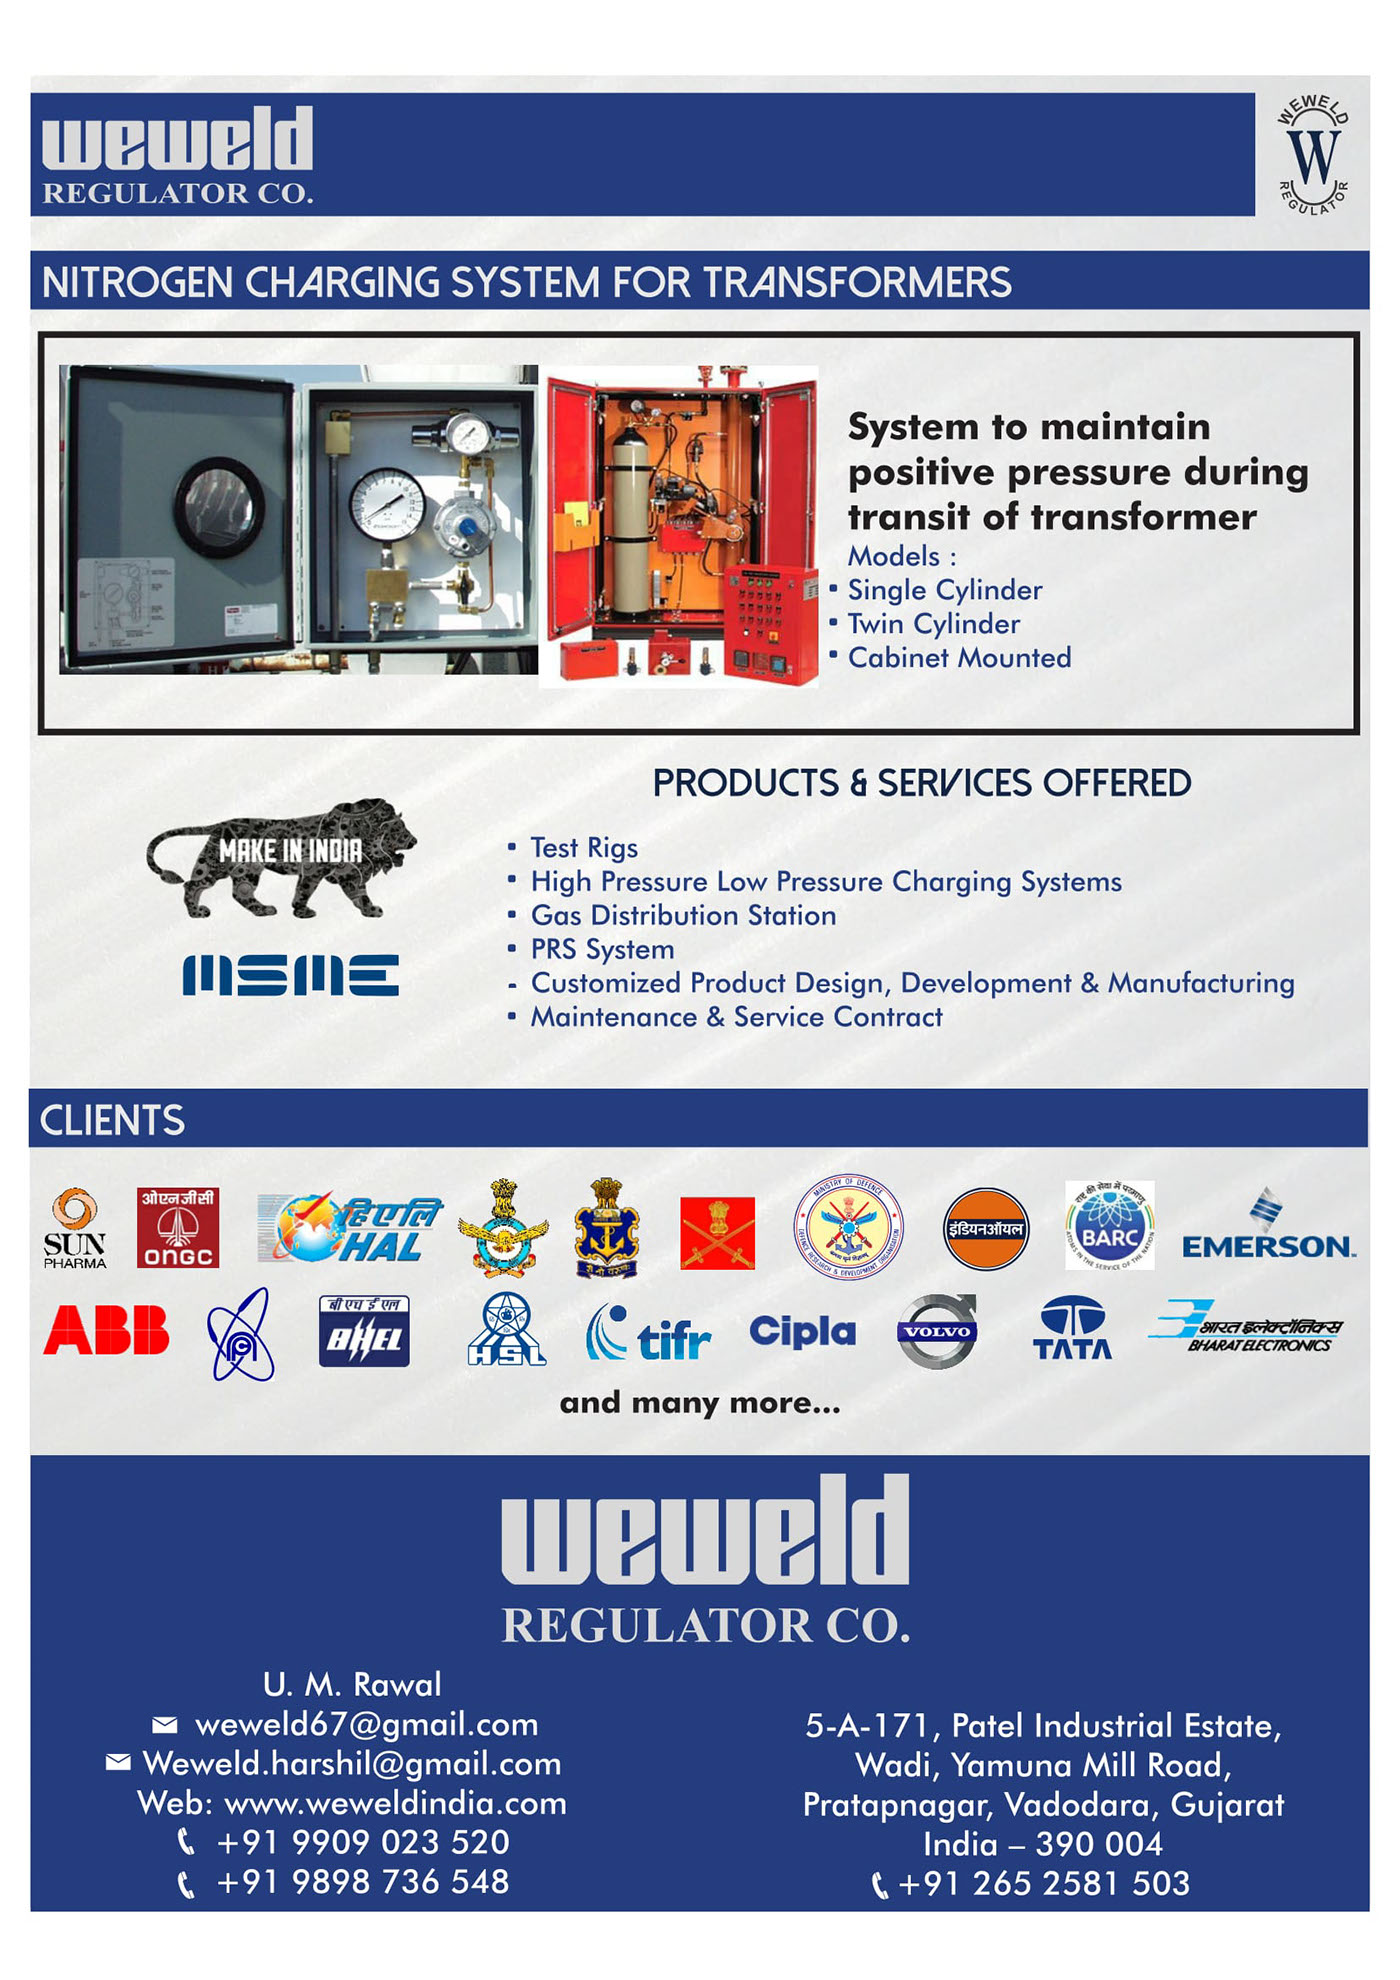 Broachure Weweld Import Substitution industrial pumps industrial brochure Conventional design